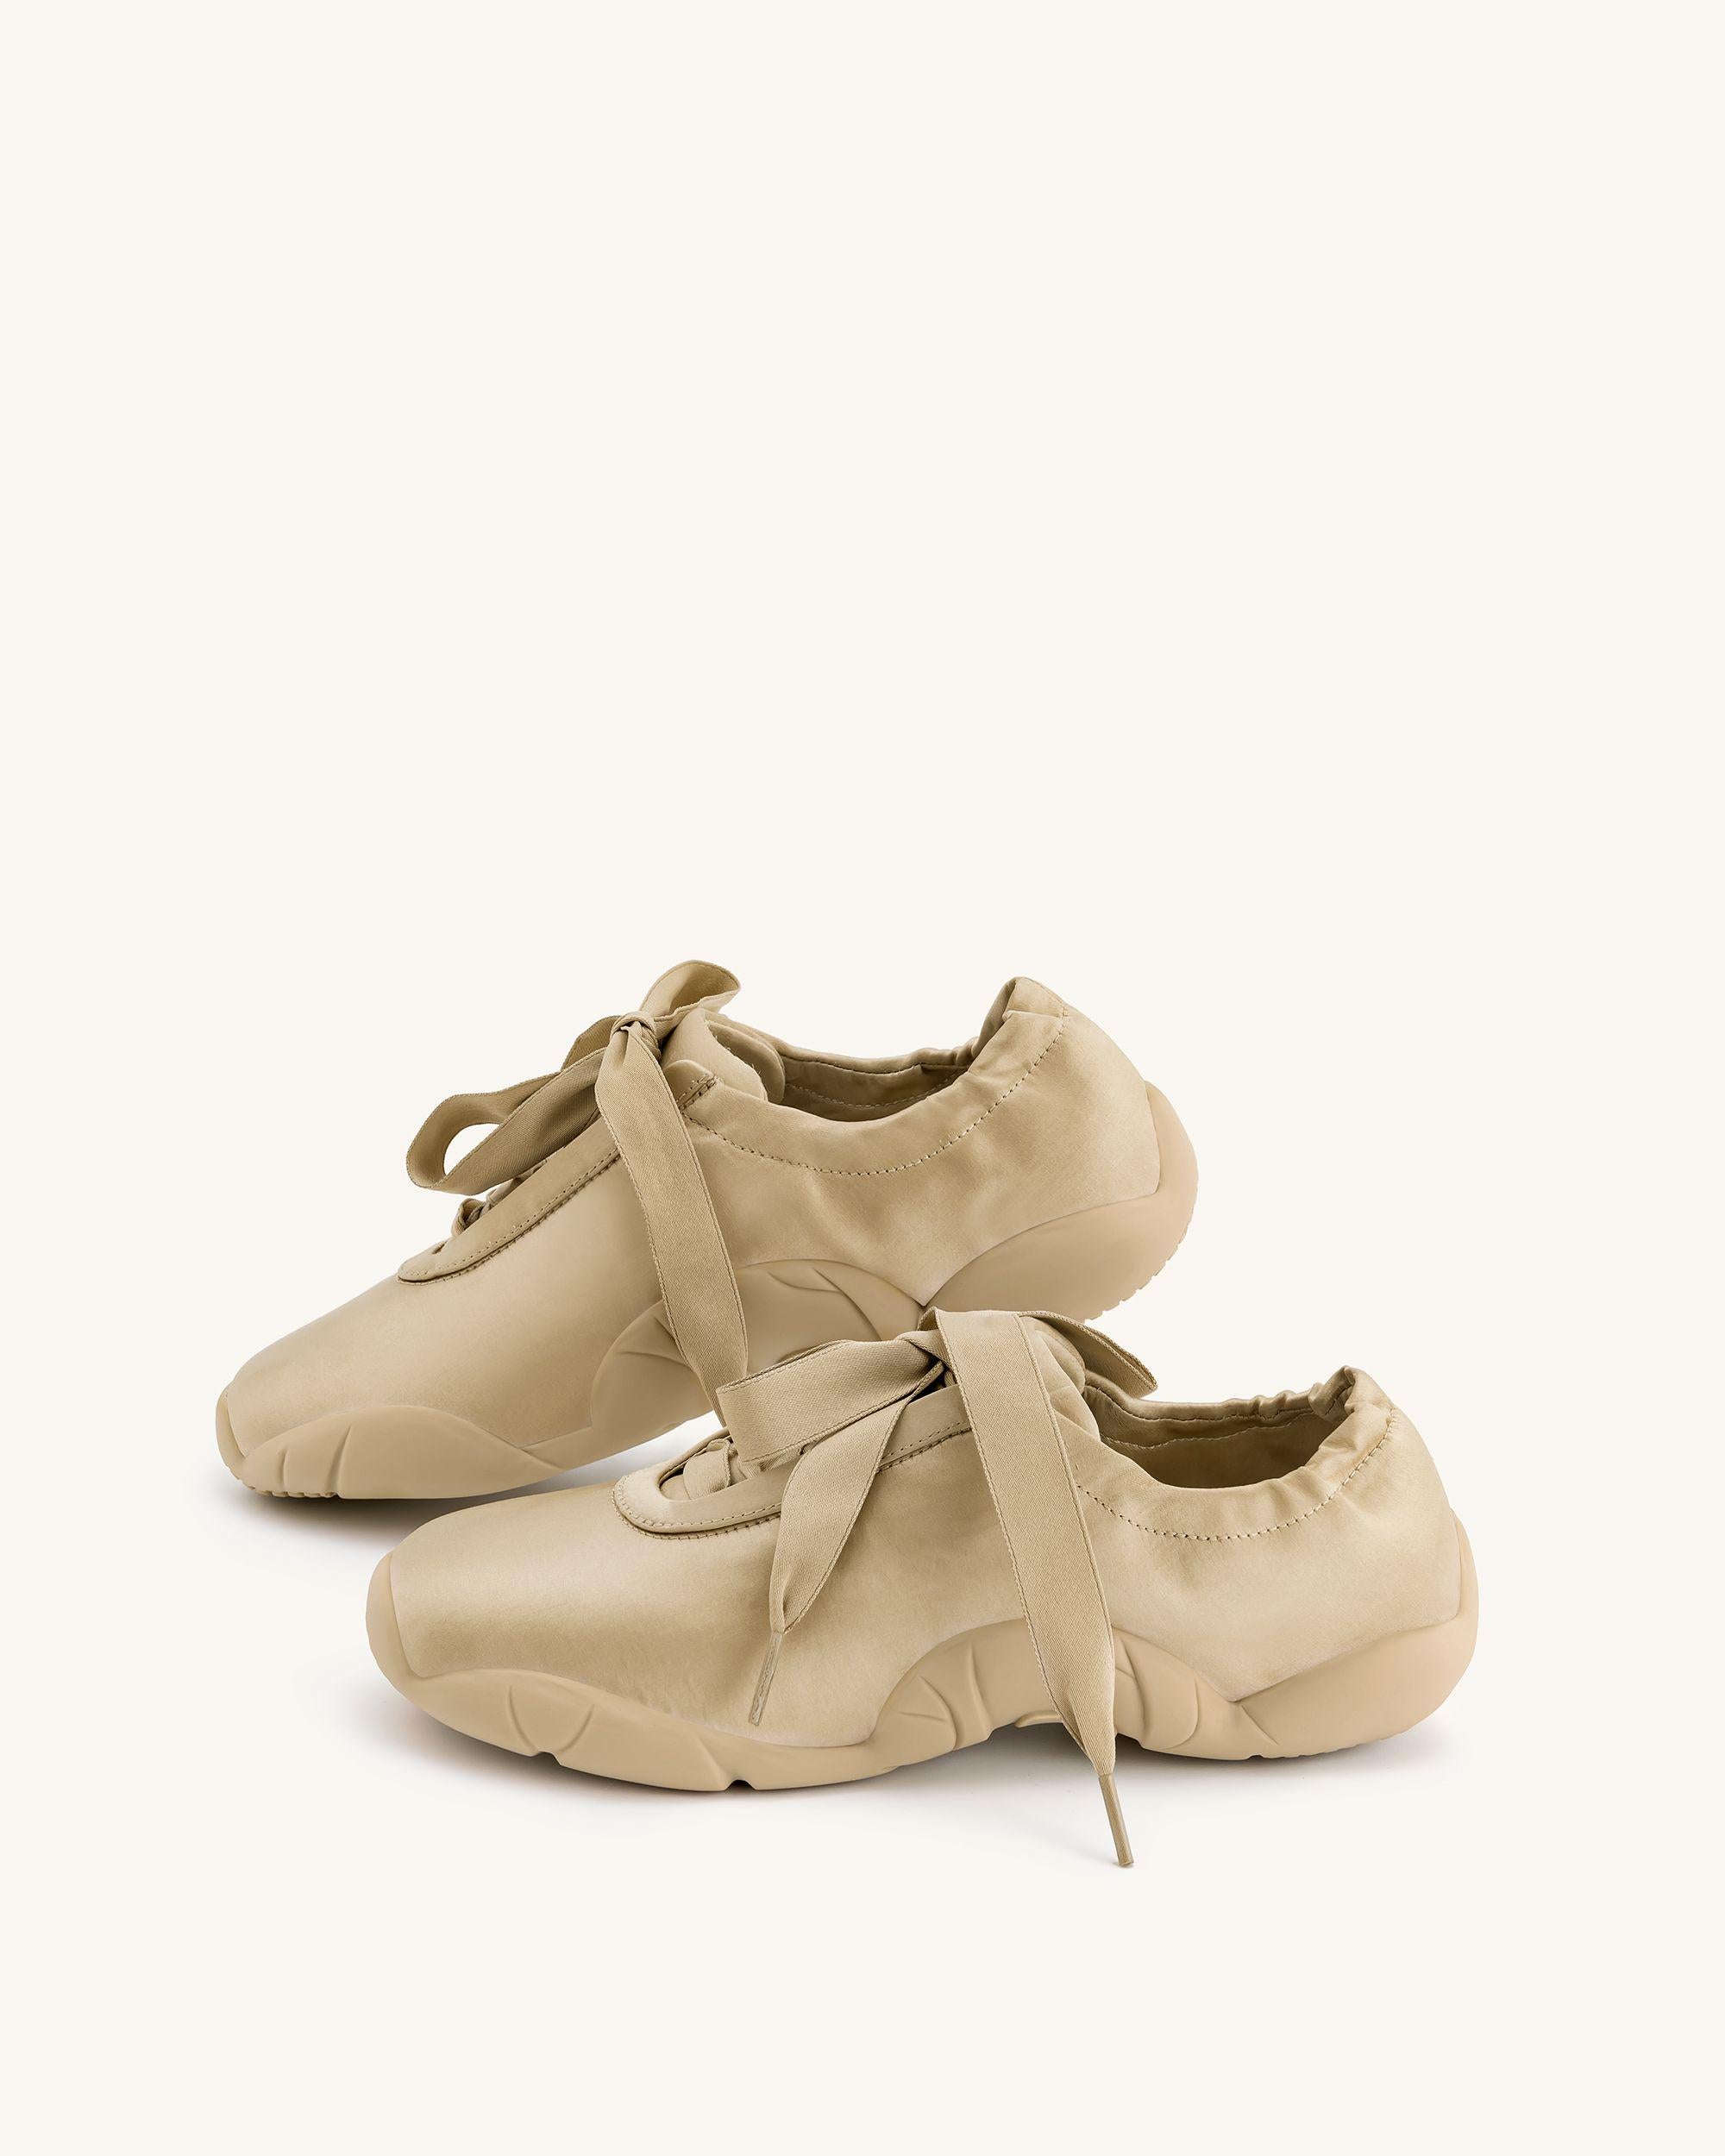 JW Pei Flavia Ballerina Sneakers